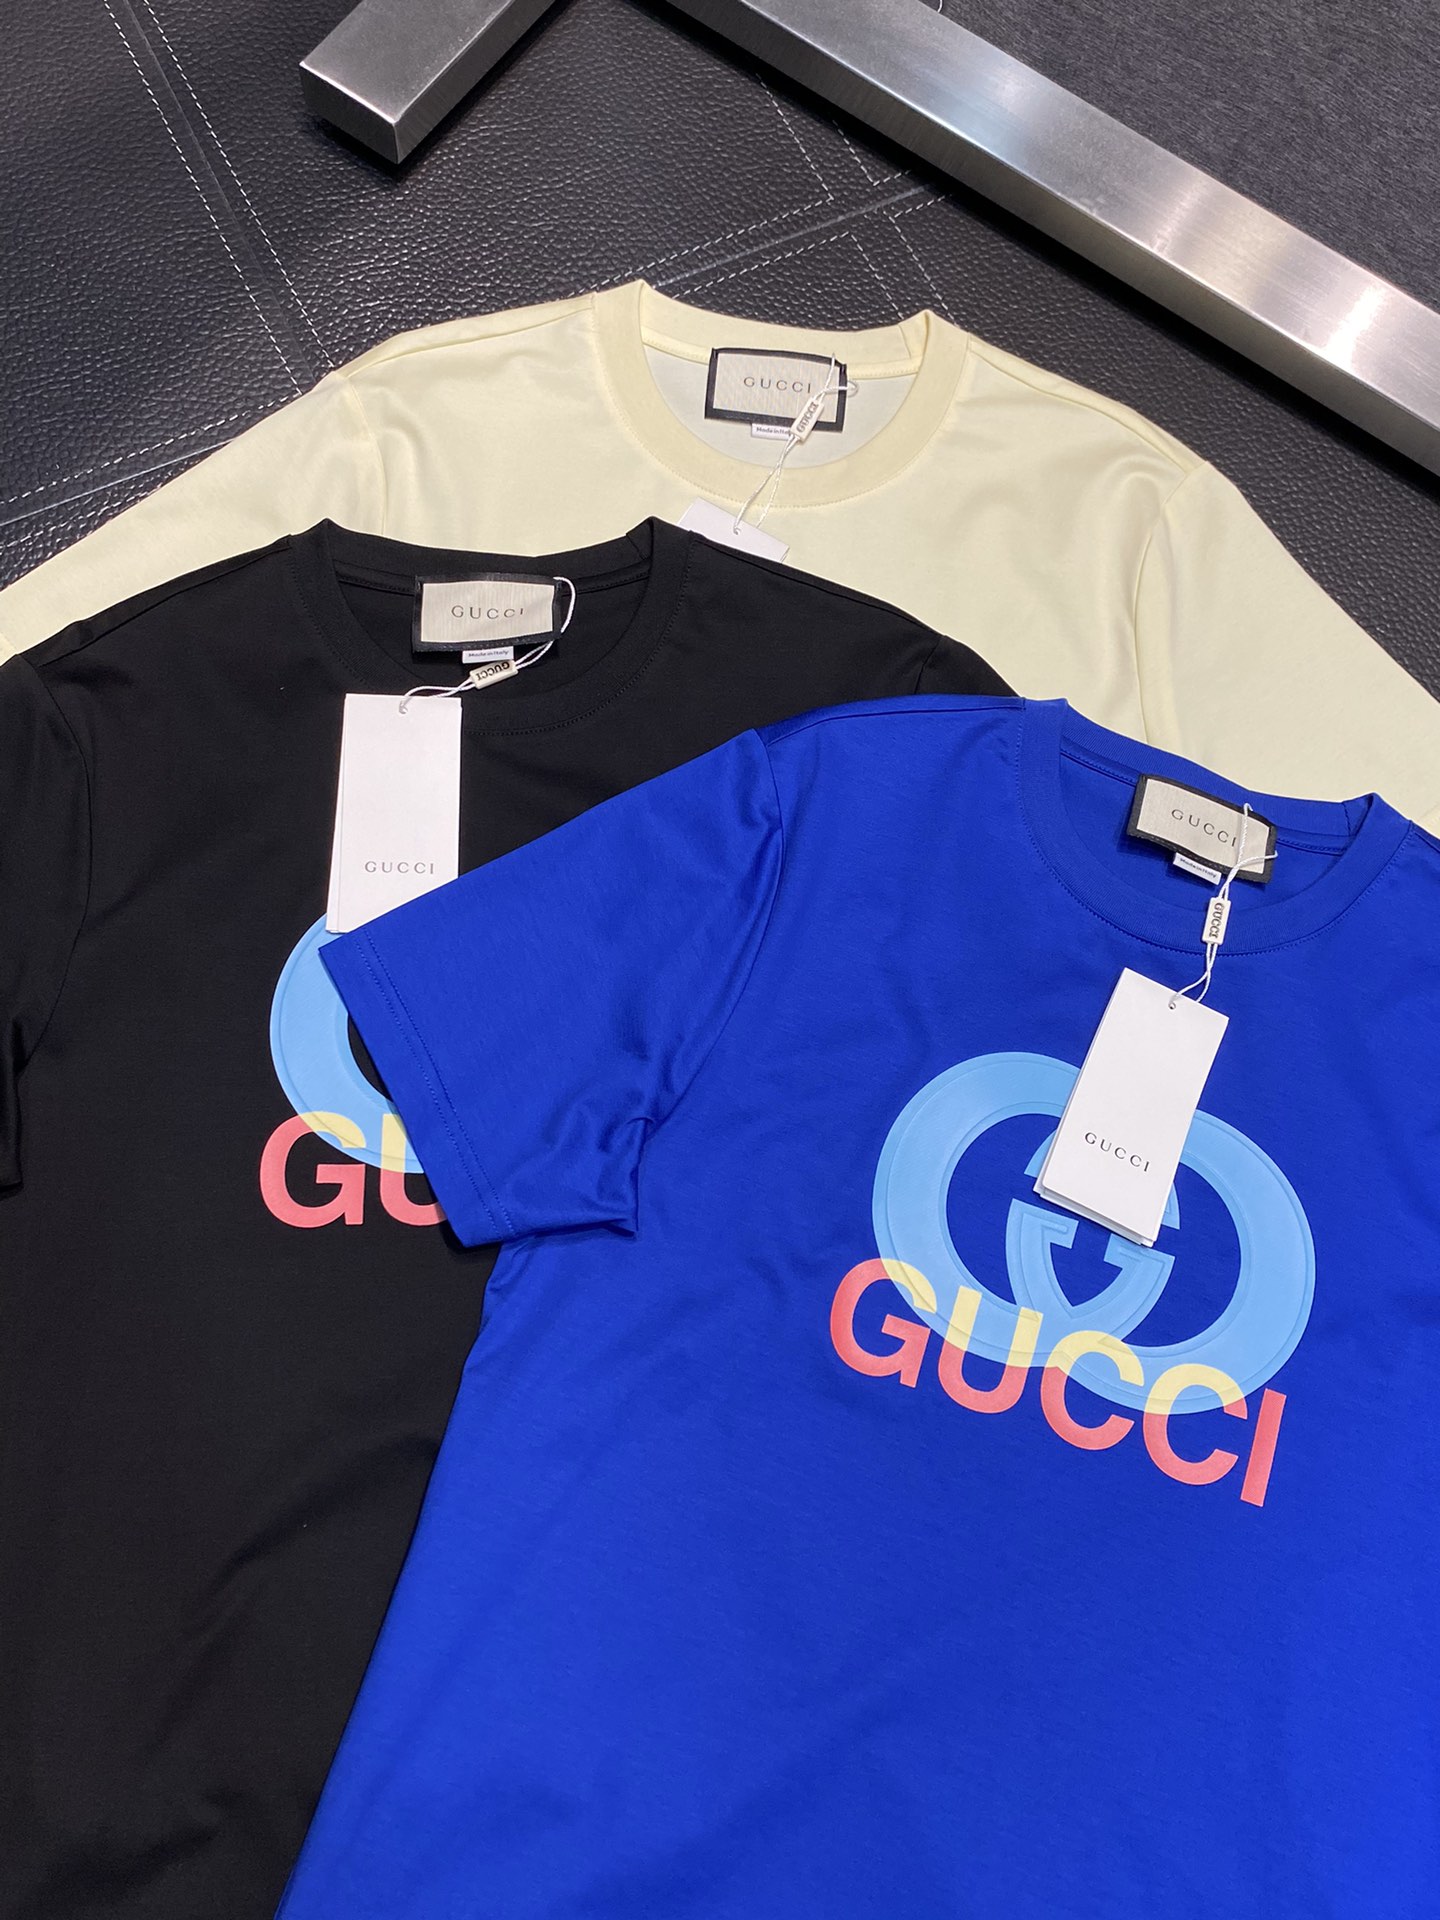 Gucci 1:1
 Clothing T-Shirt Top Quality Website
 Men Fashion Short Sleeve